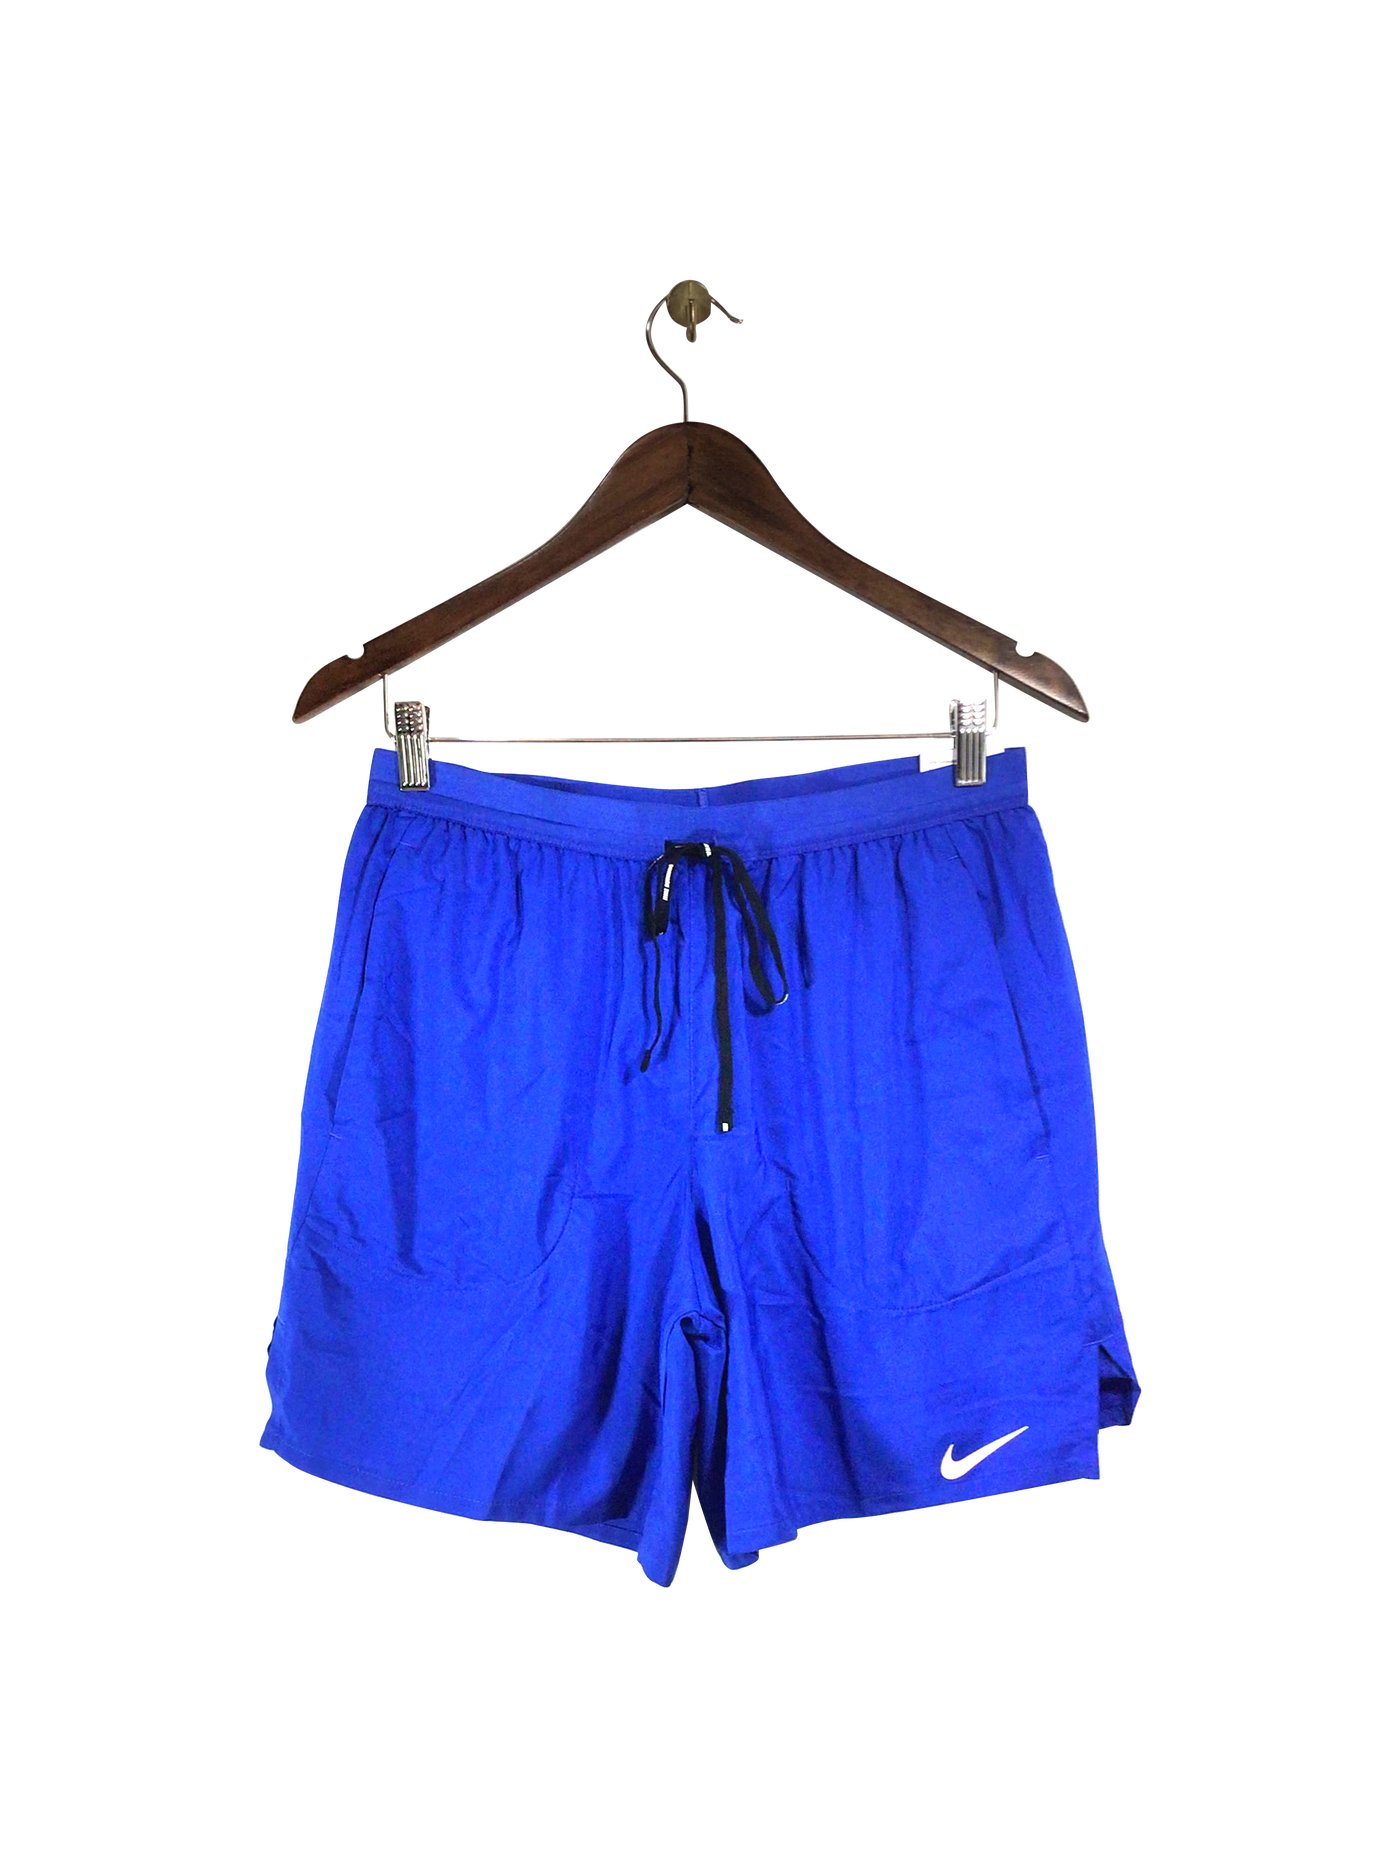 NIKE Activewear Short Regular fit in Blue - Size M | 17.56 $ KOOP